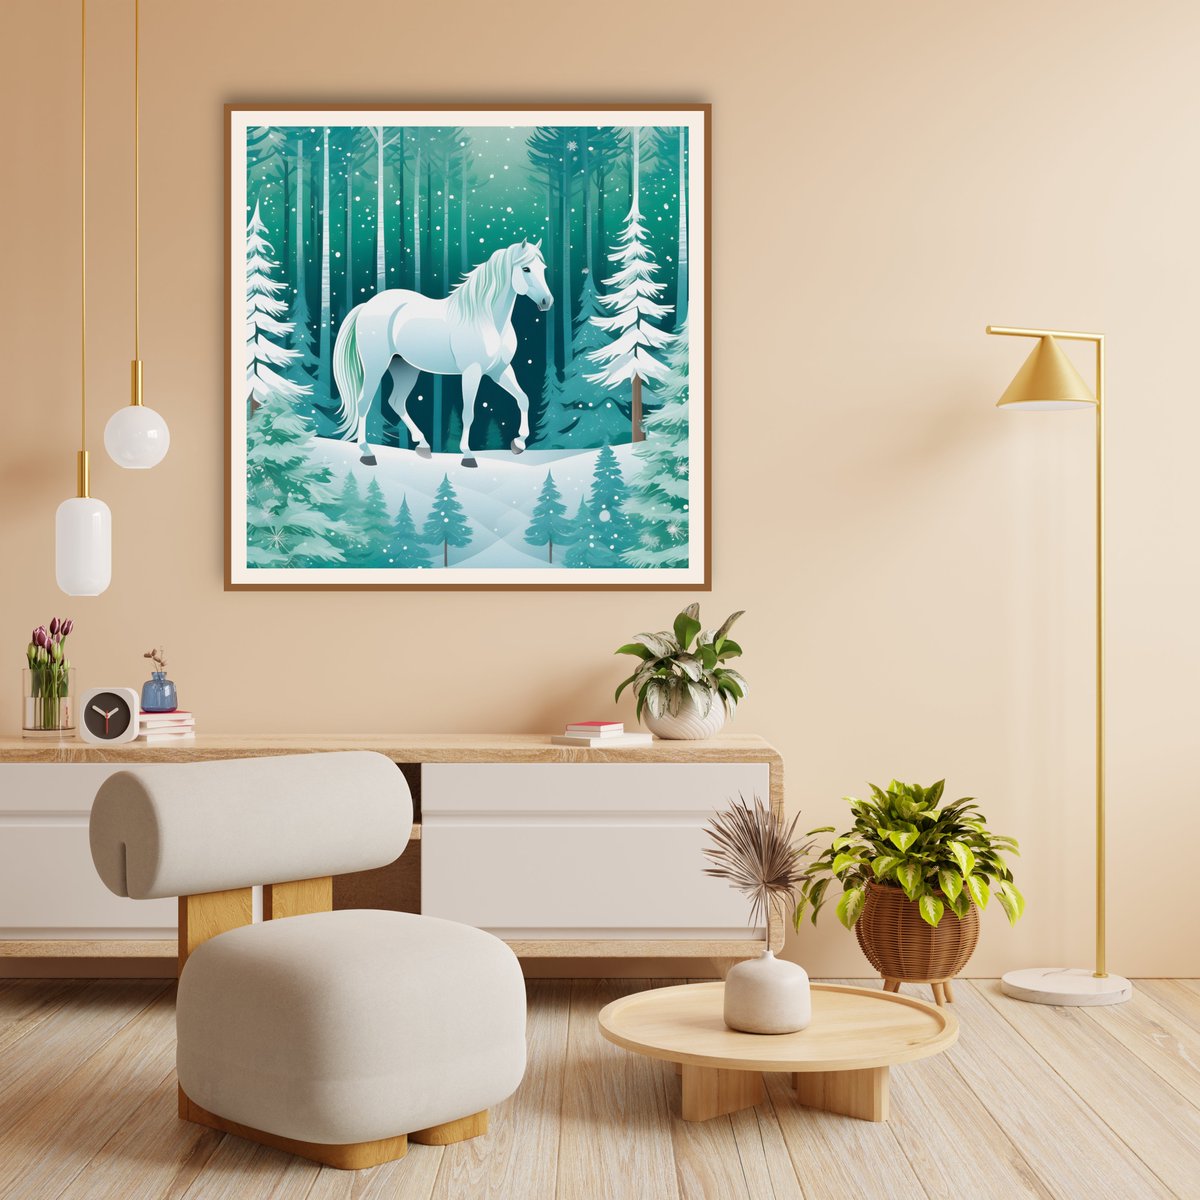 zazzle.com/the_white_hors…
#zazzle #zazzlemade #kidroom #interiordesign #horse #roomdecor #poster #posterdesign #winter #snowyforest